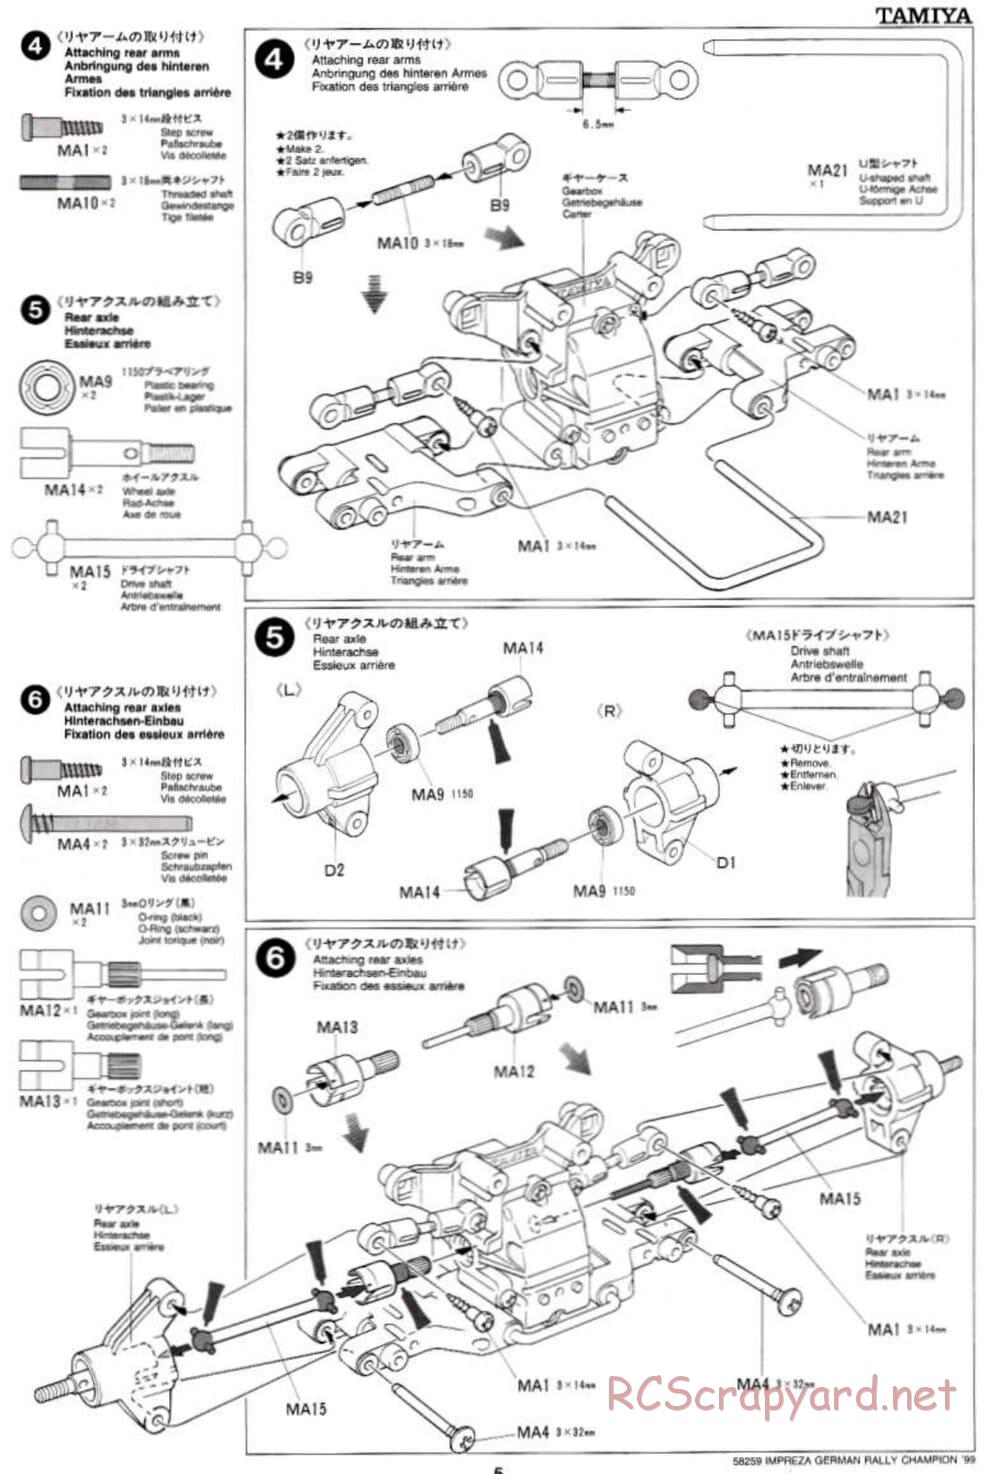 Tamiya - Subaru Impreza German Rally Champion 99 - TB-01 Chassis - Manual - Page 5